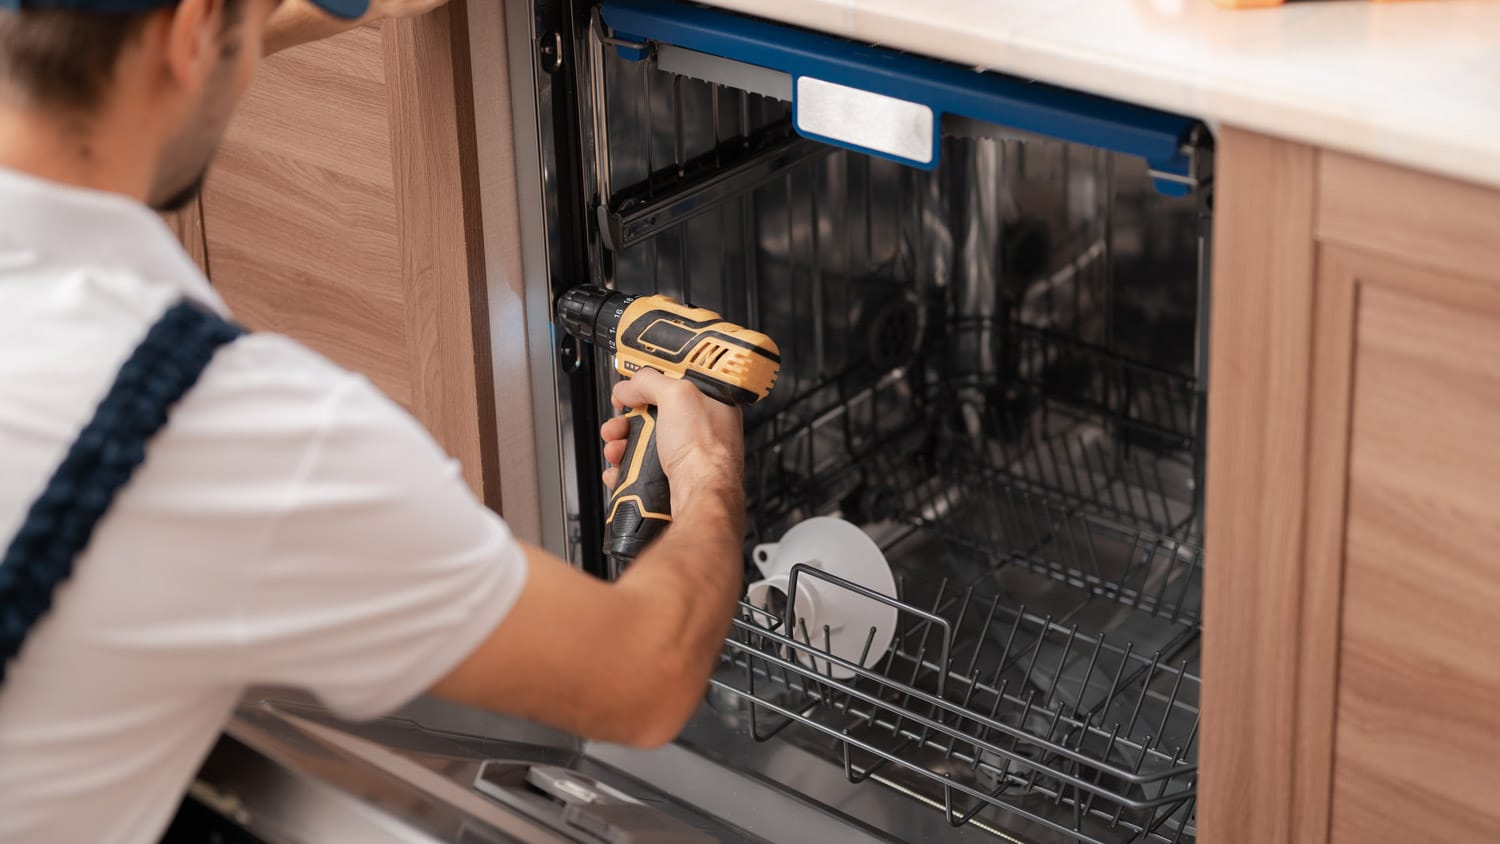 5 Star Plumbing | How to Plumb a Dishwasher